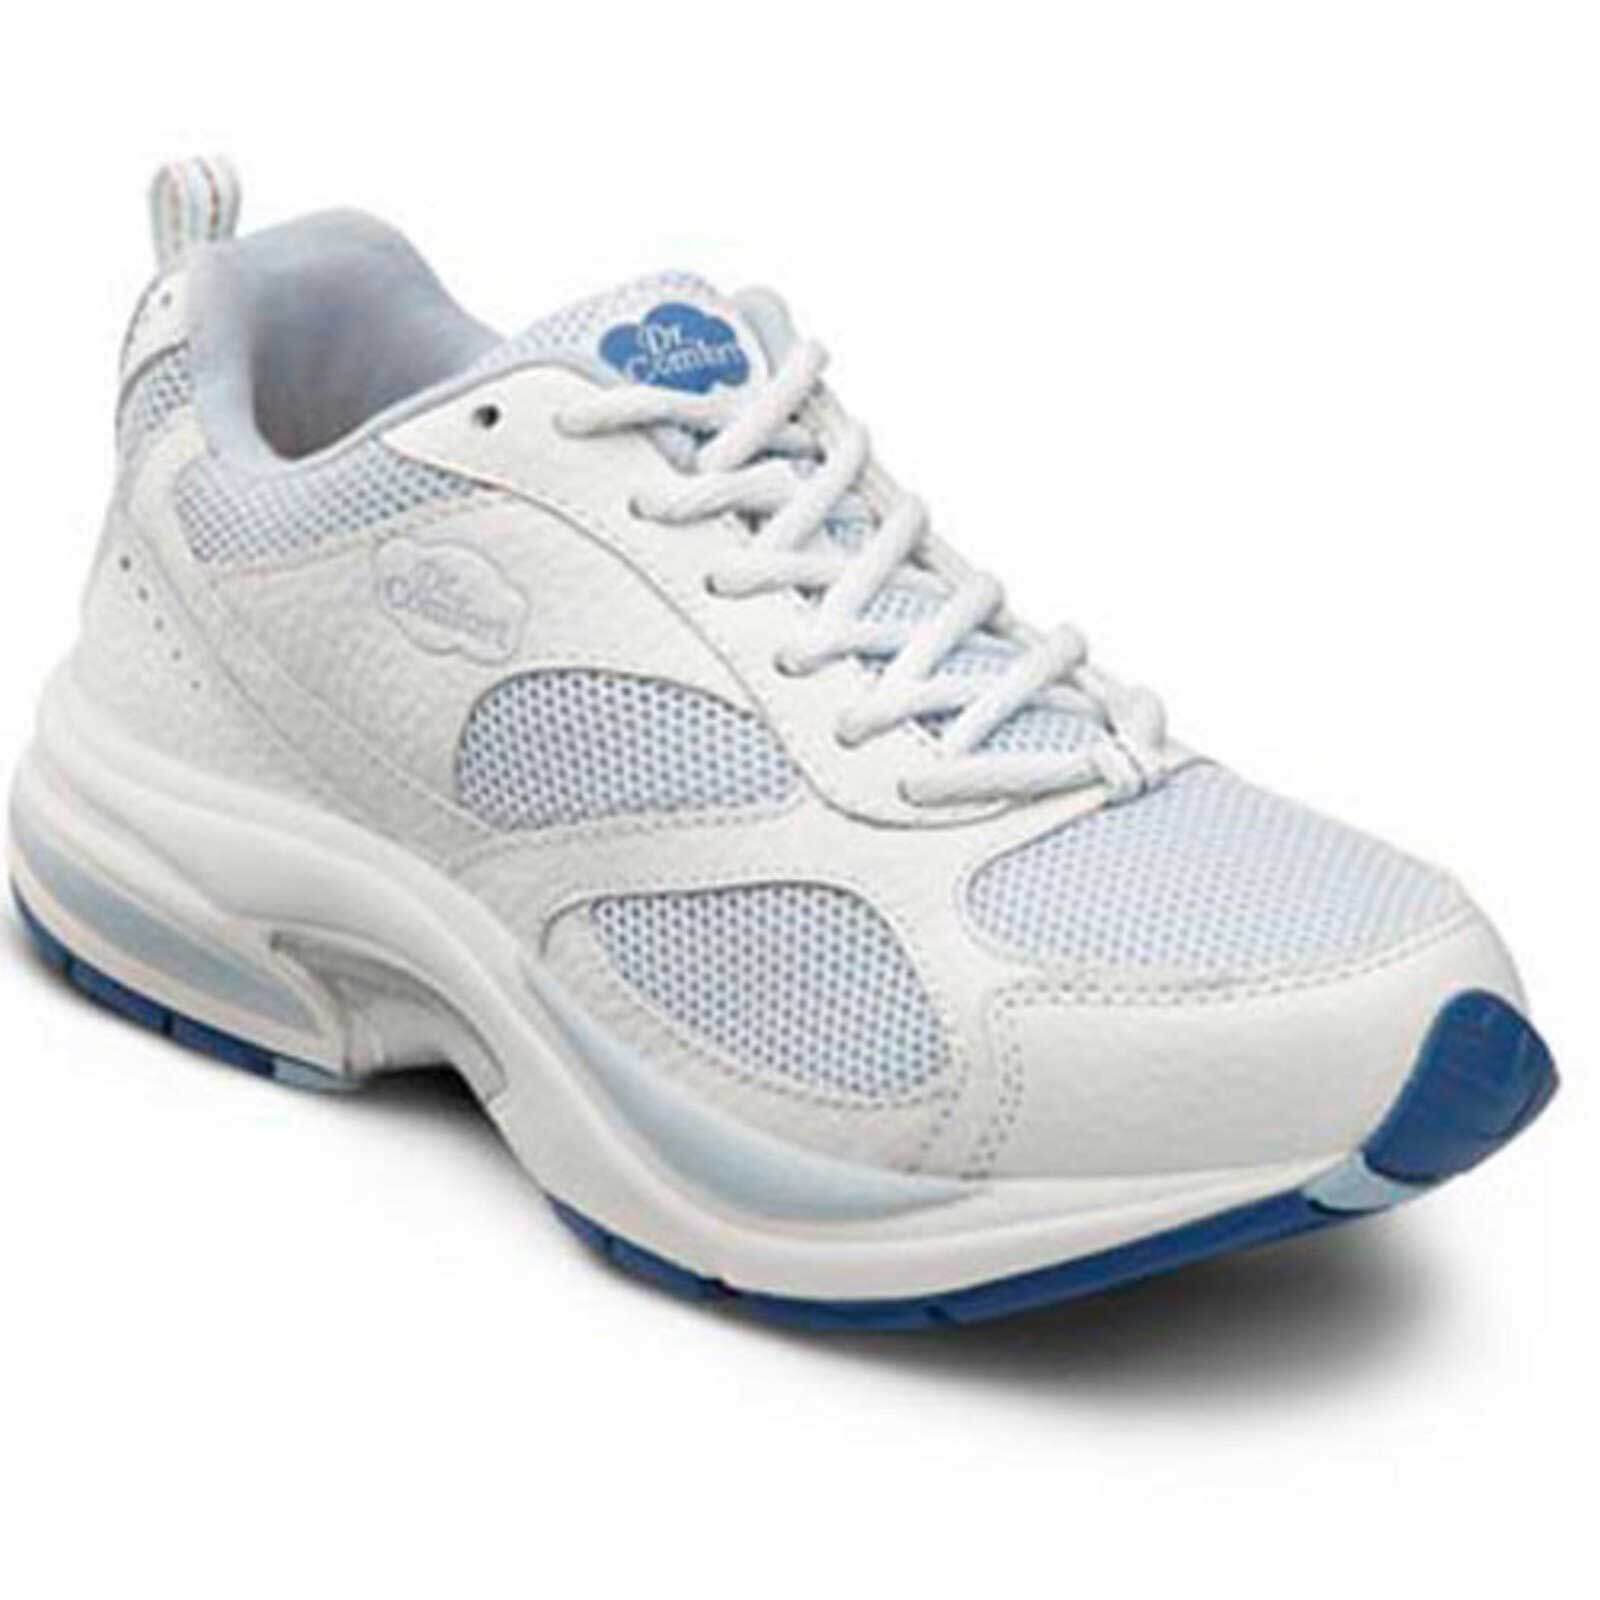 Dr Comfort Diabetic Shoes Comfort Sells Men And Women Footwear Lines 